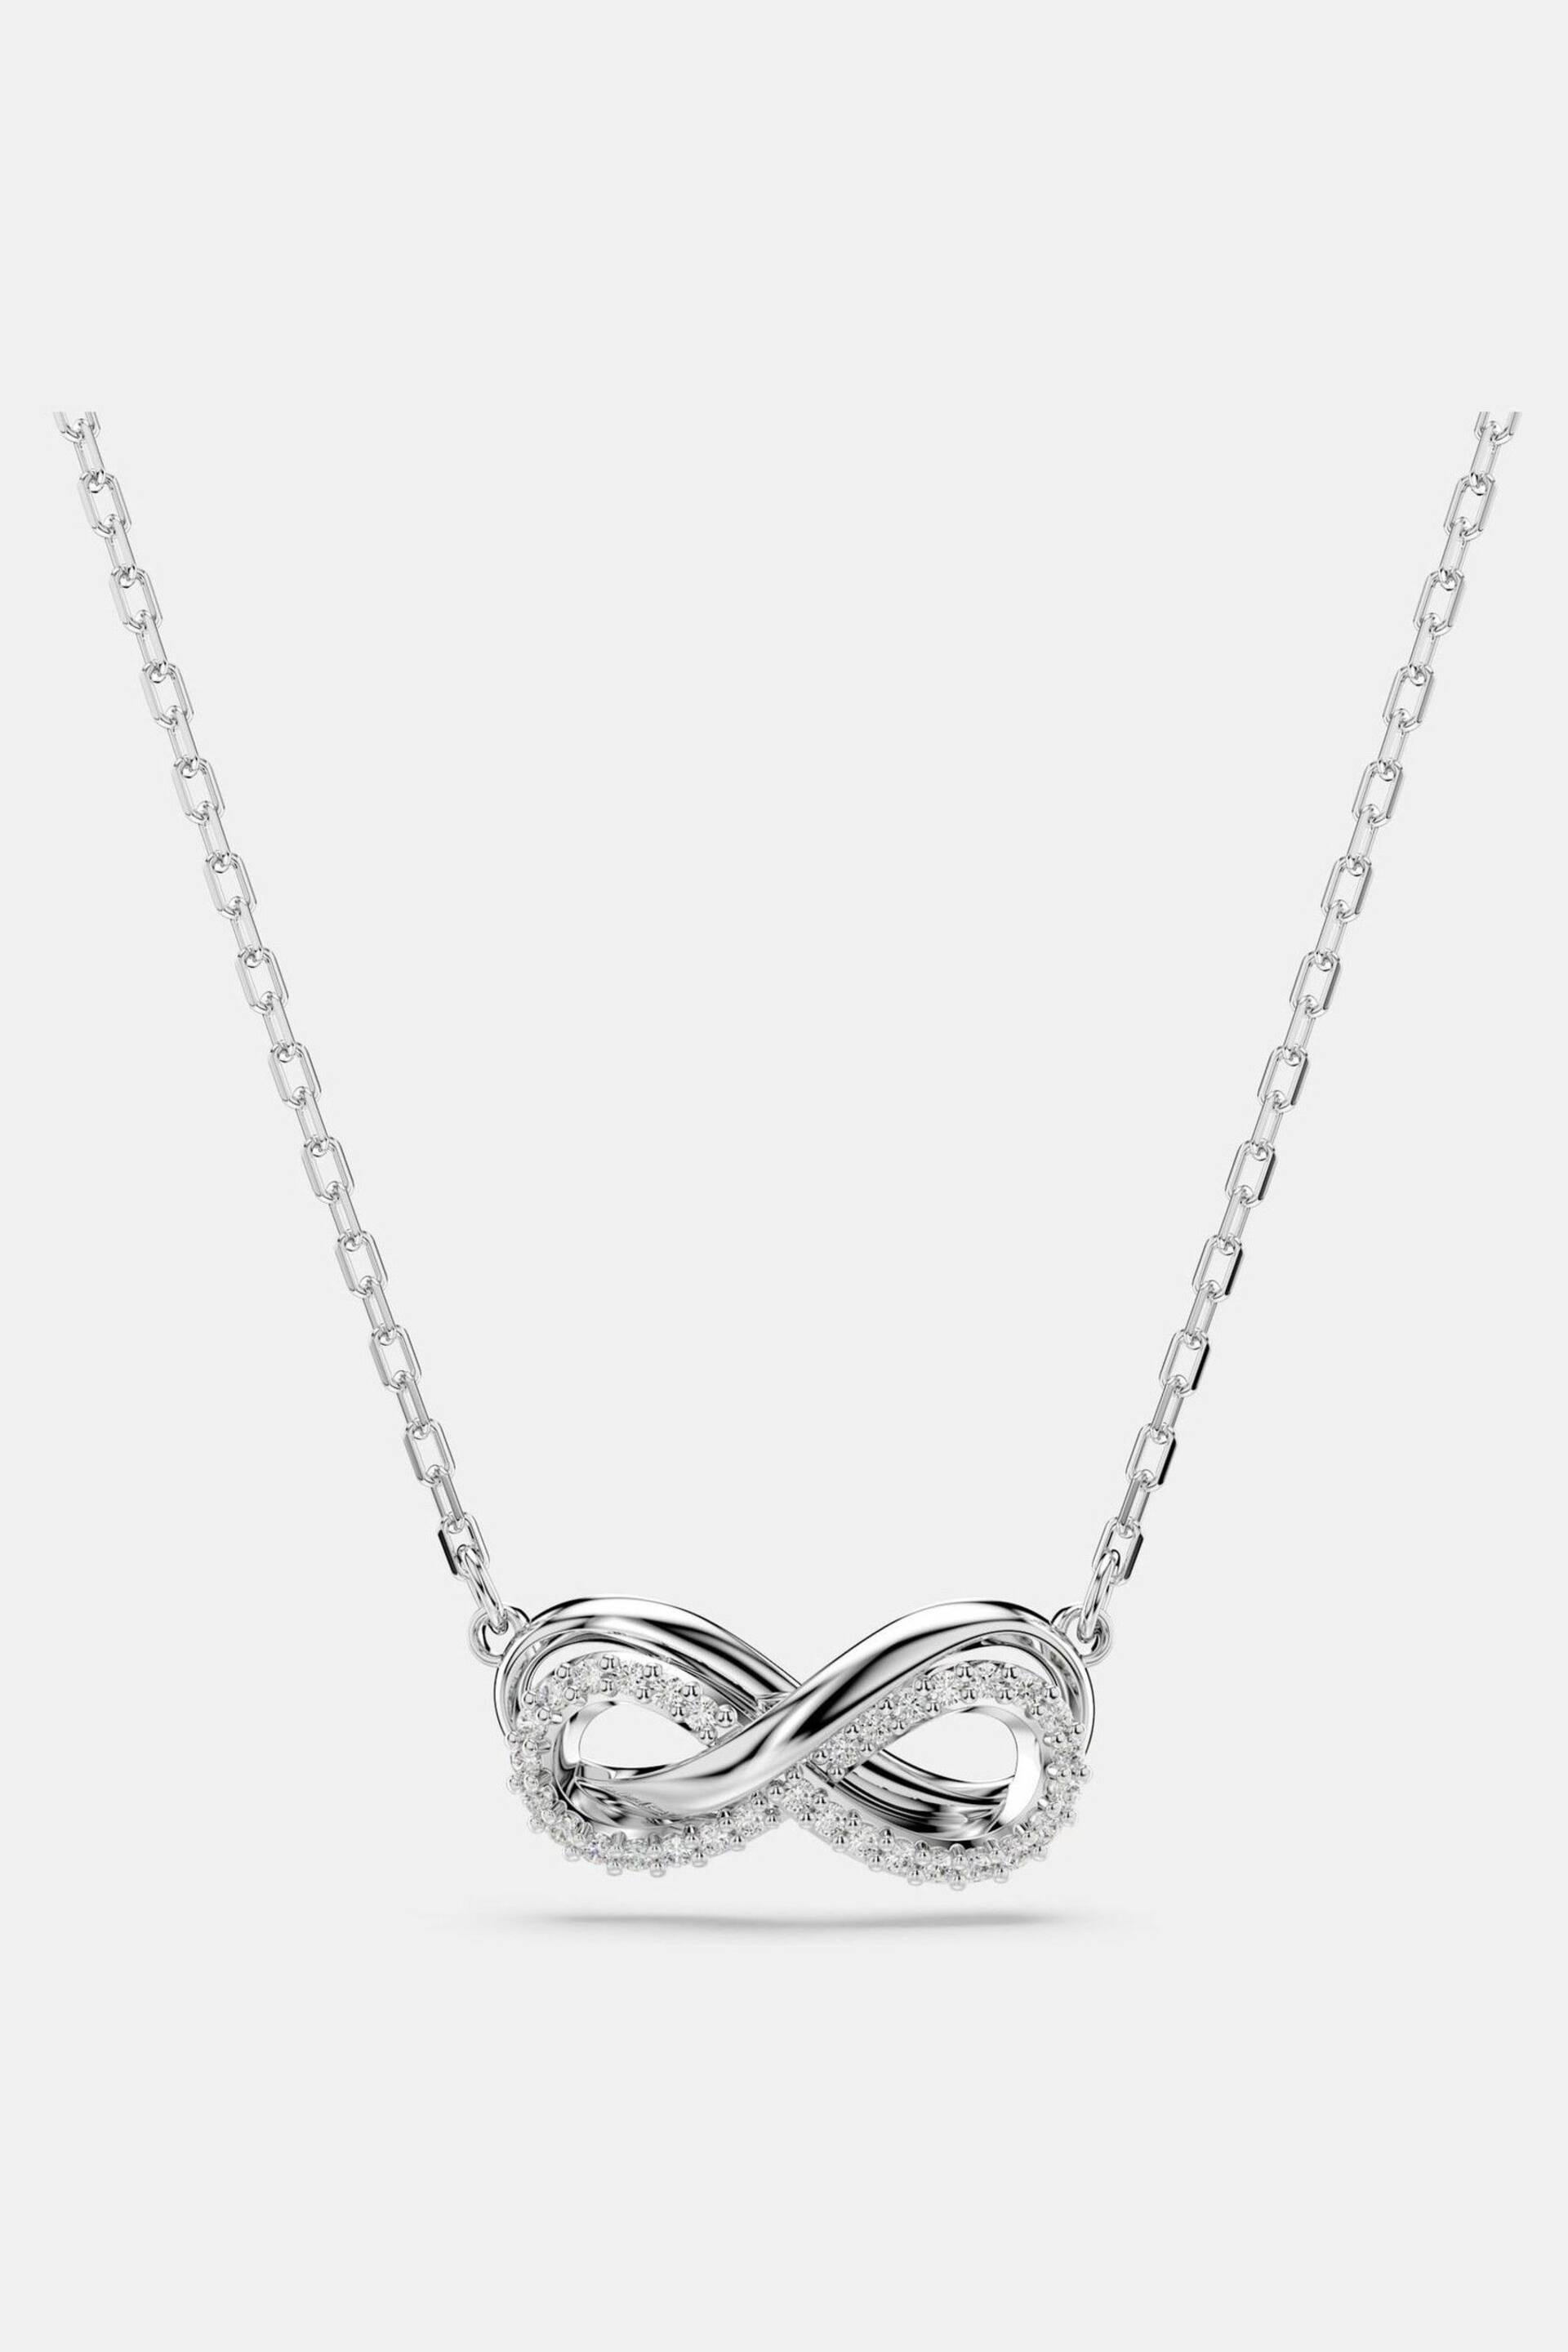 Swarovski Silver Swarovski Infinity Crystal Pendant Necklace - Image 4 of 5